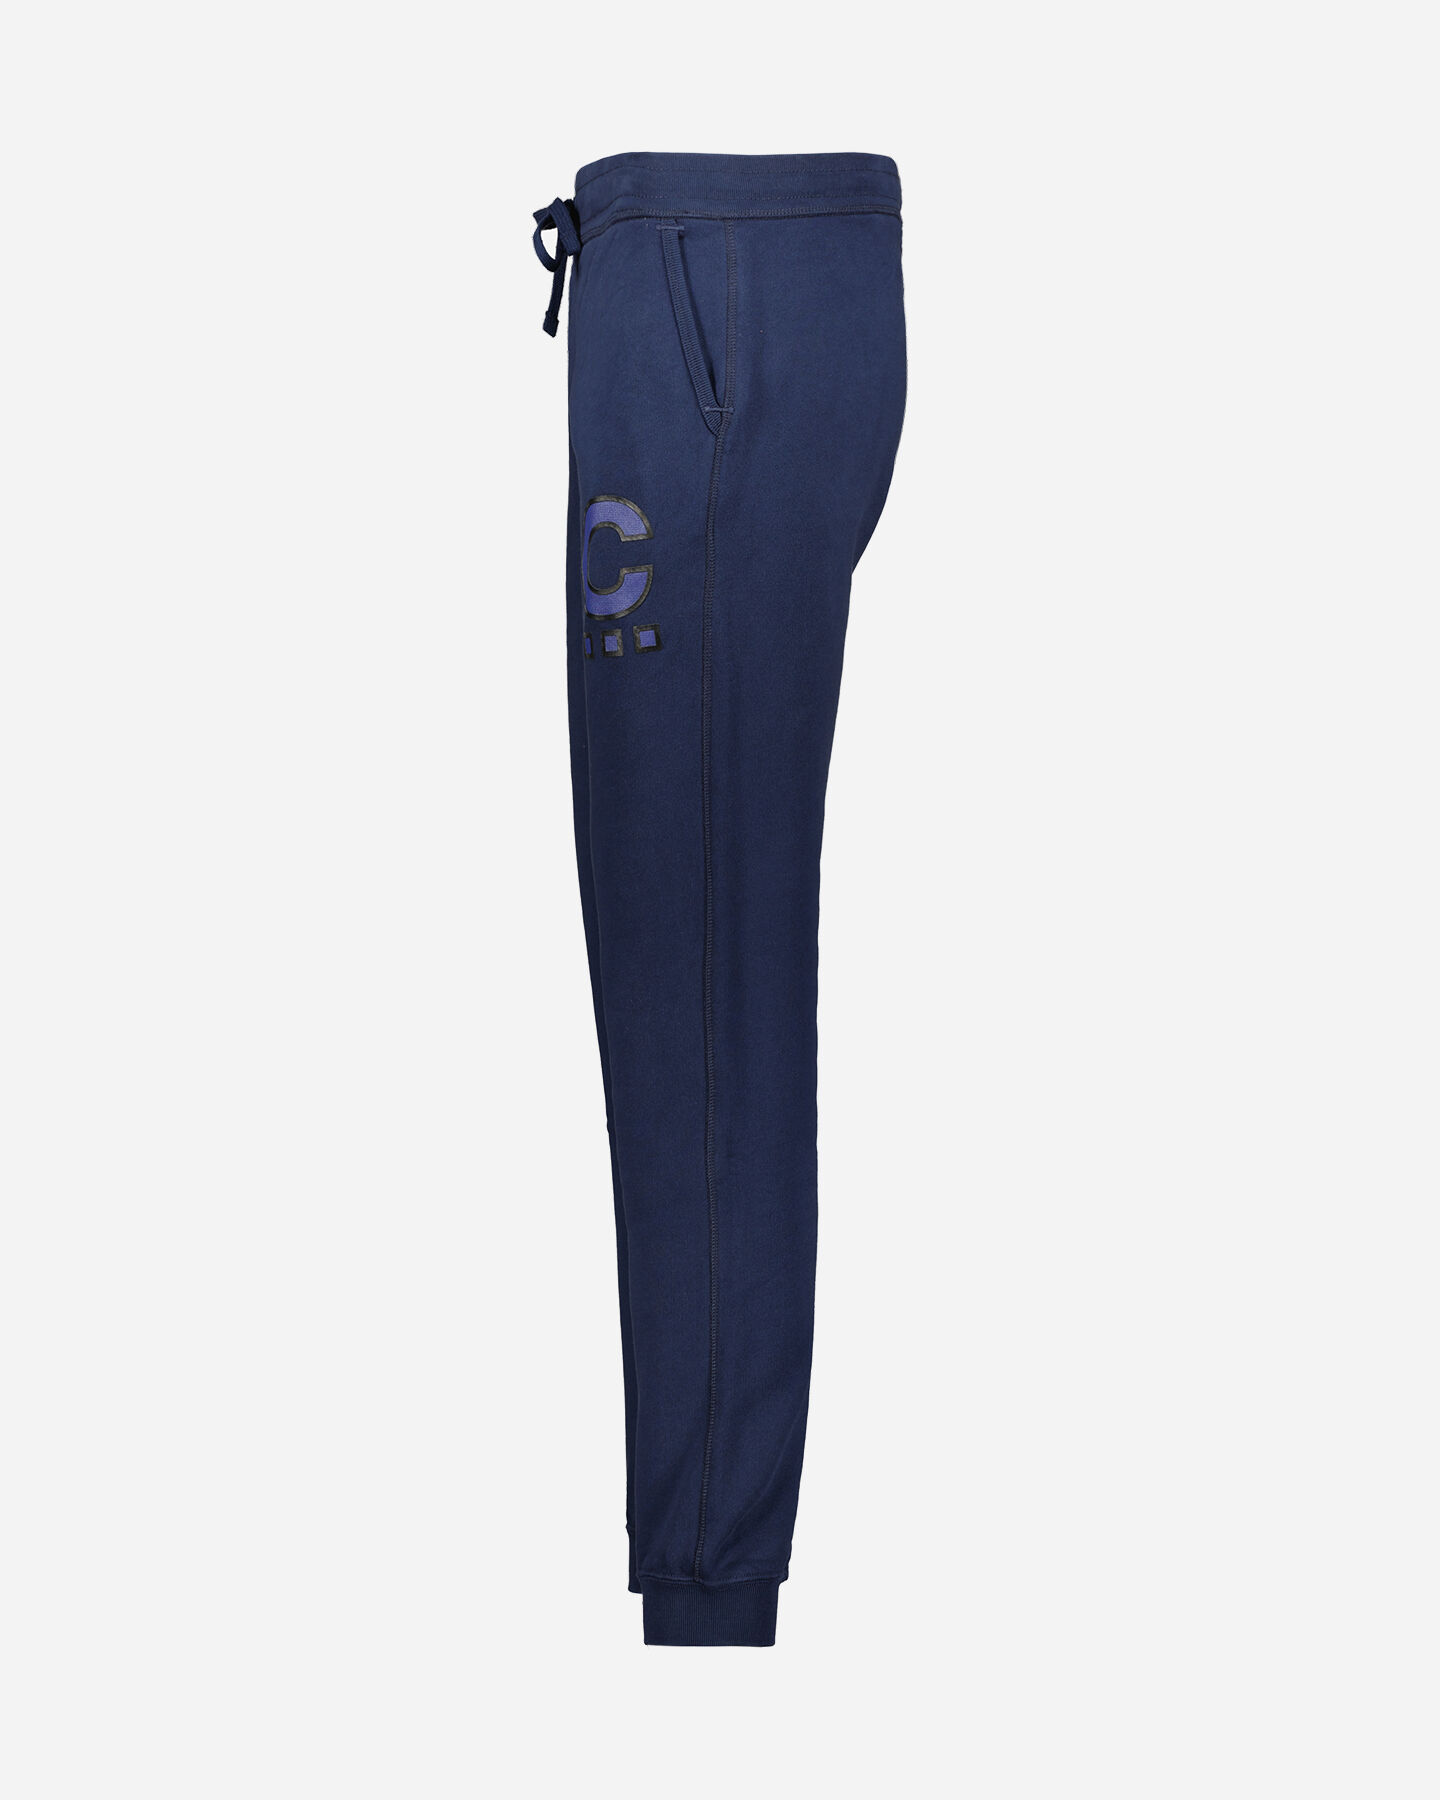  Pantalone BEST COMPANY CLASSIC W S4116977|800|XS scatto 1